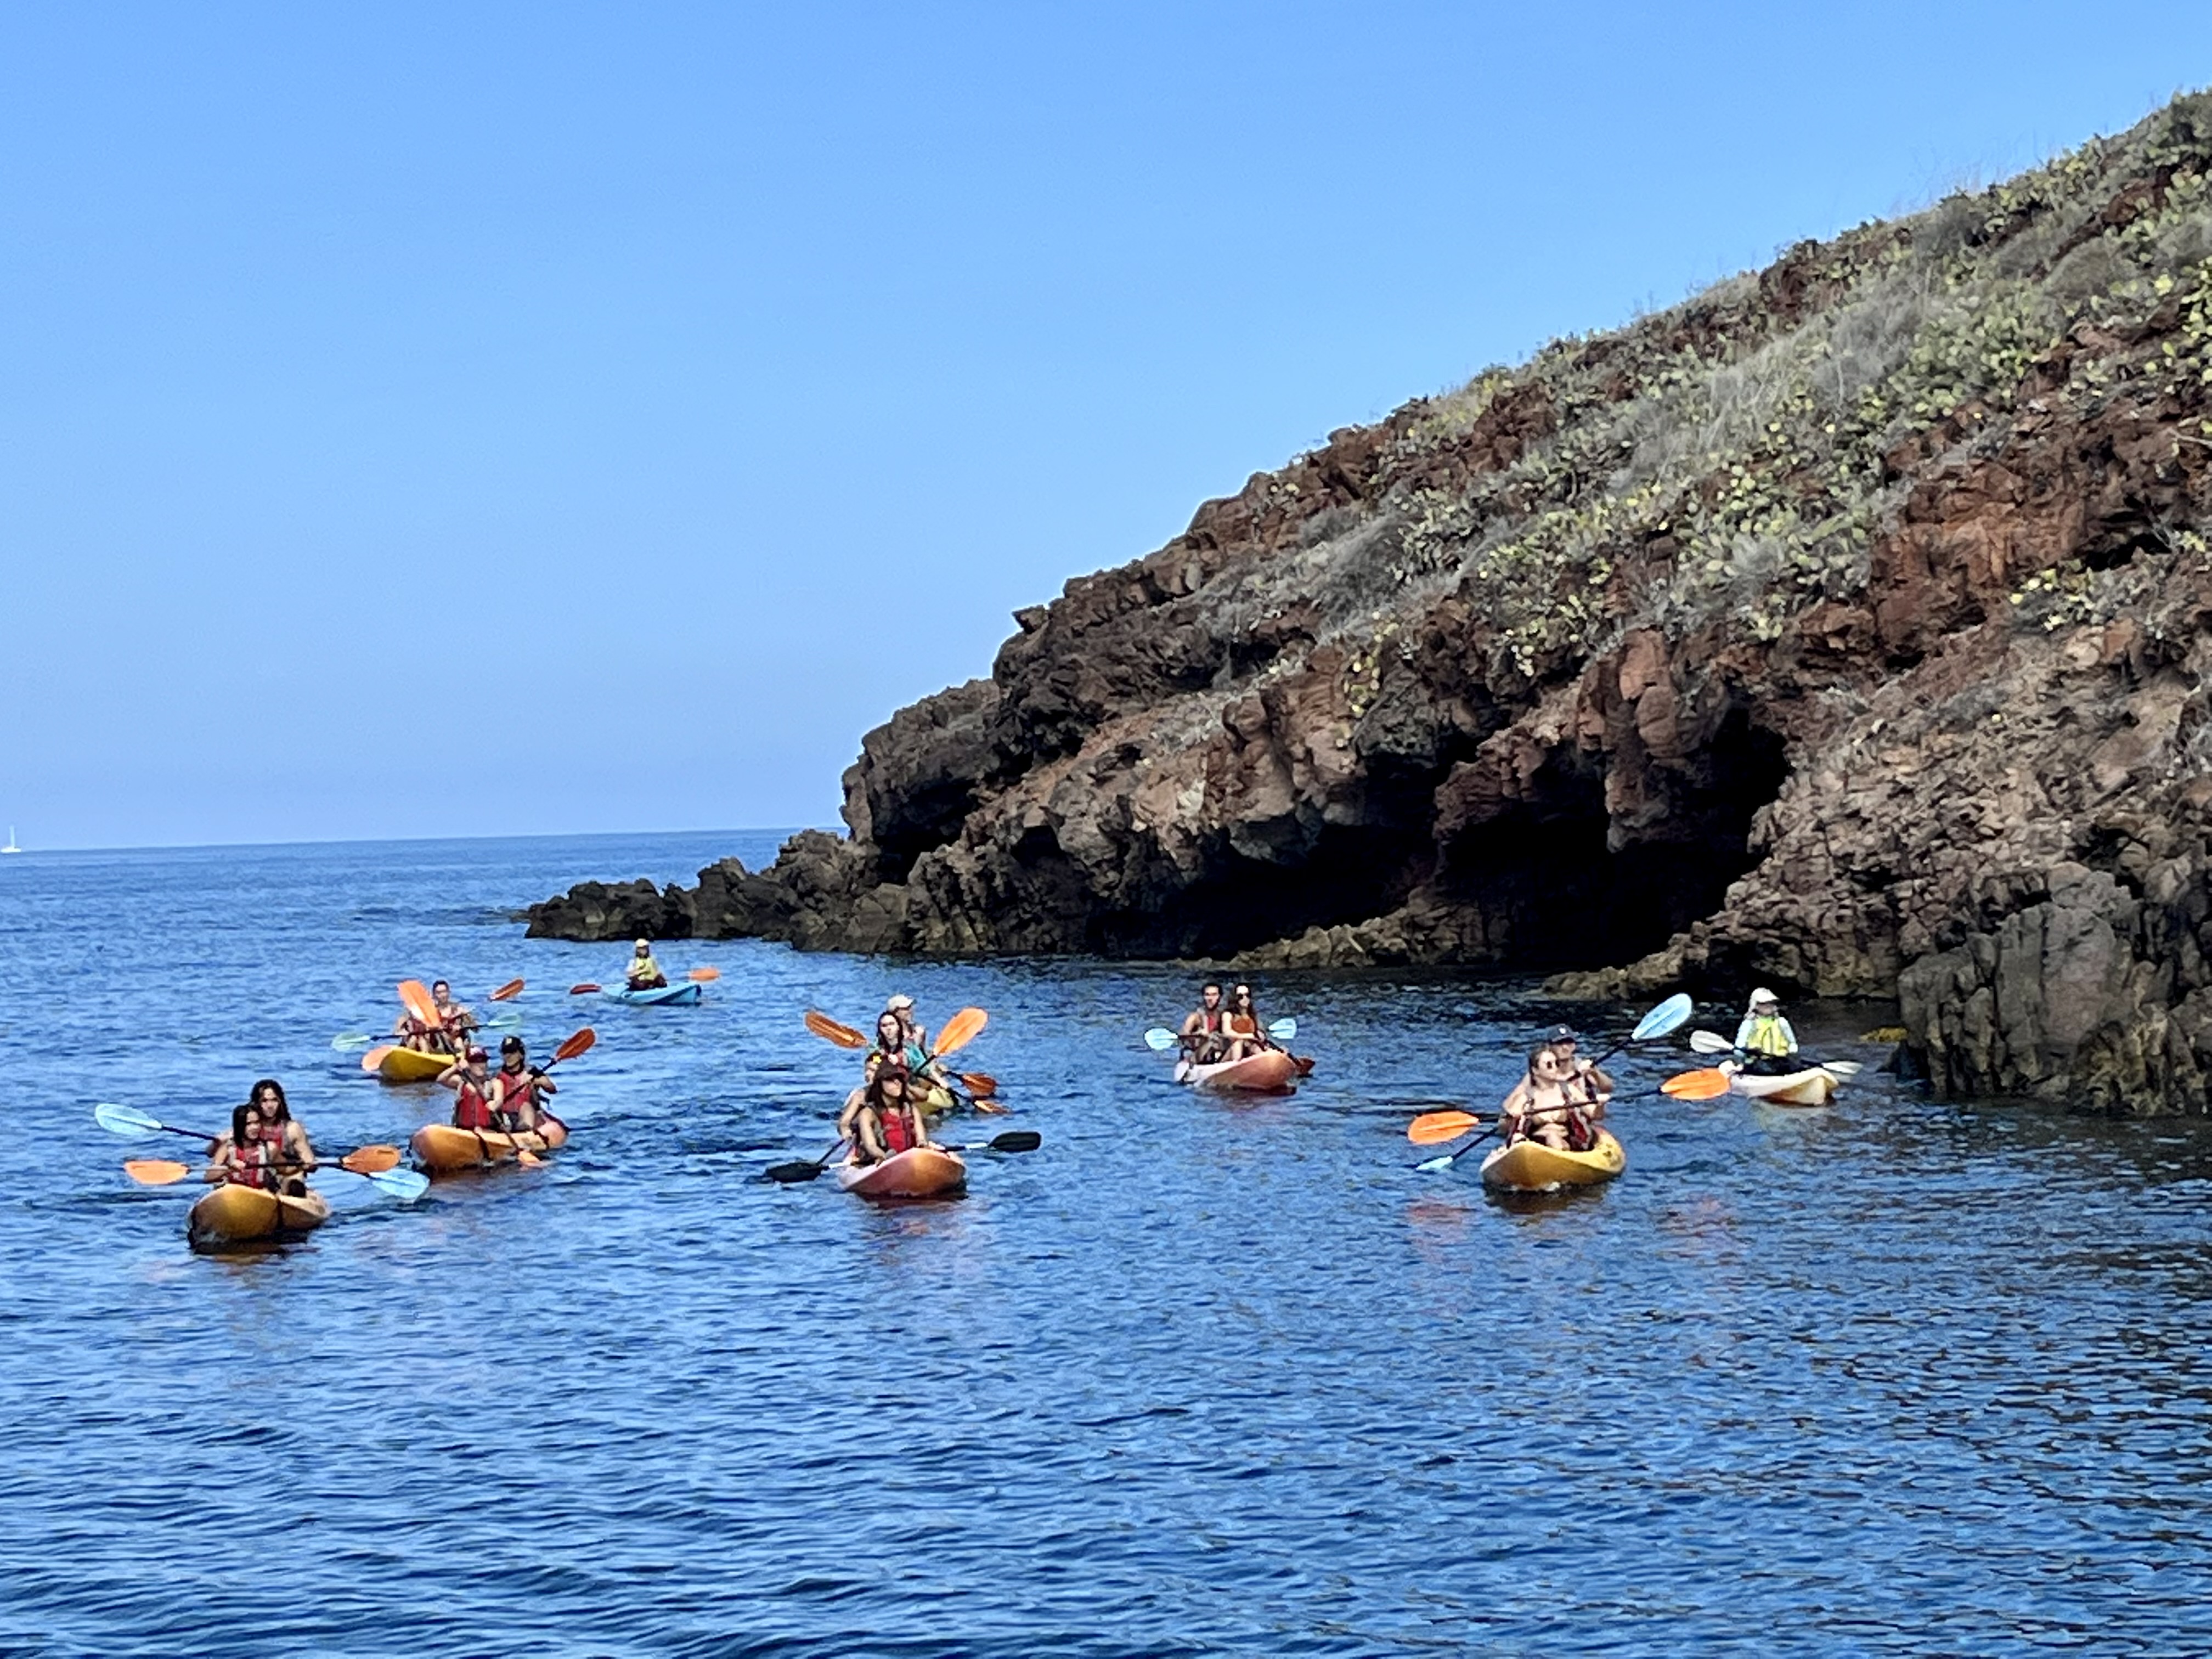 Students explore Catalina Island by kayak